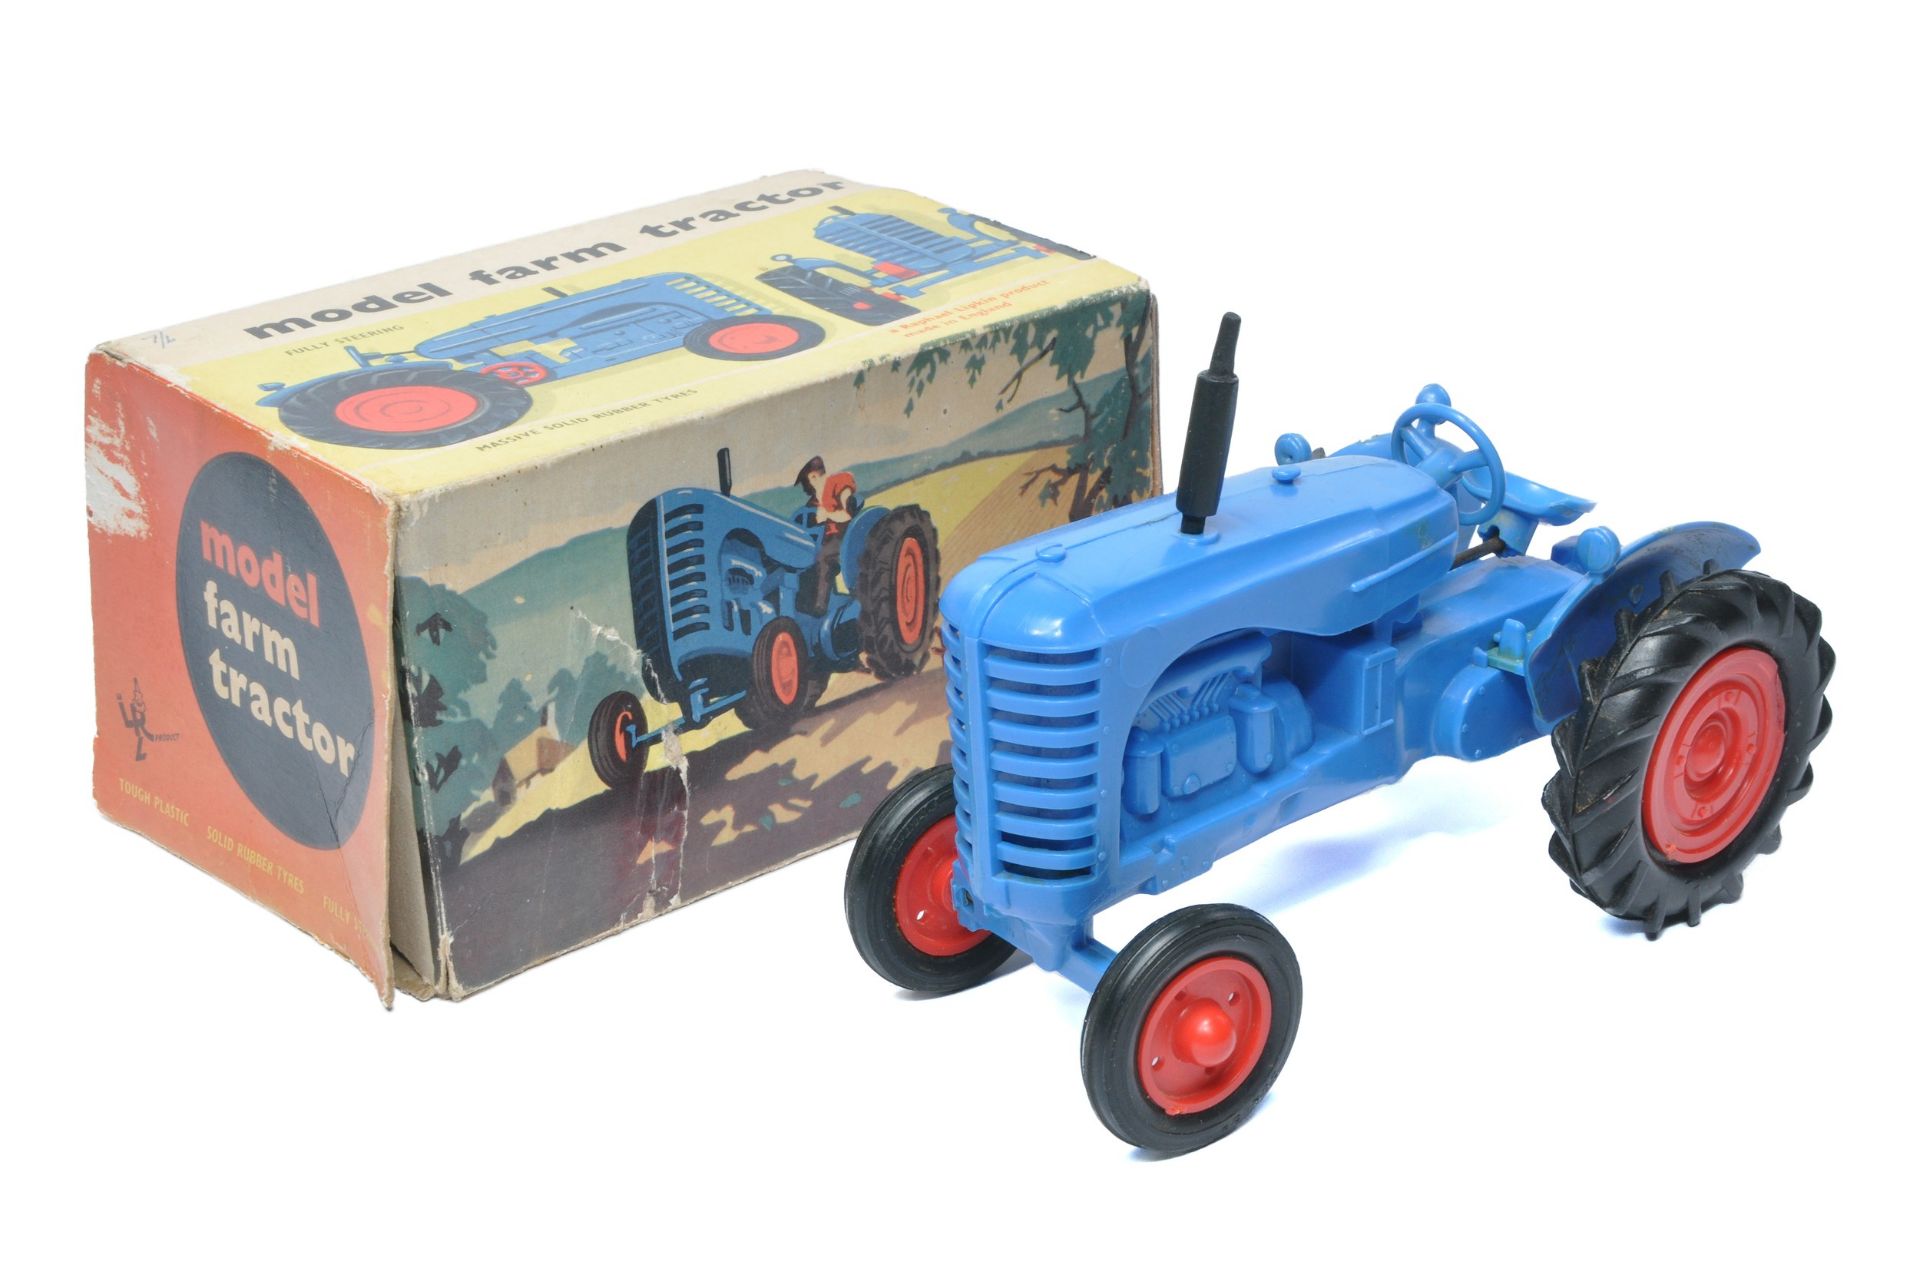 Raphael Lipkin (England) approx 1/24 plastic scale model of the Massey Harris Tractor in blue.